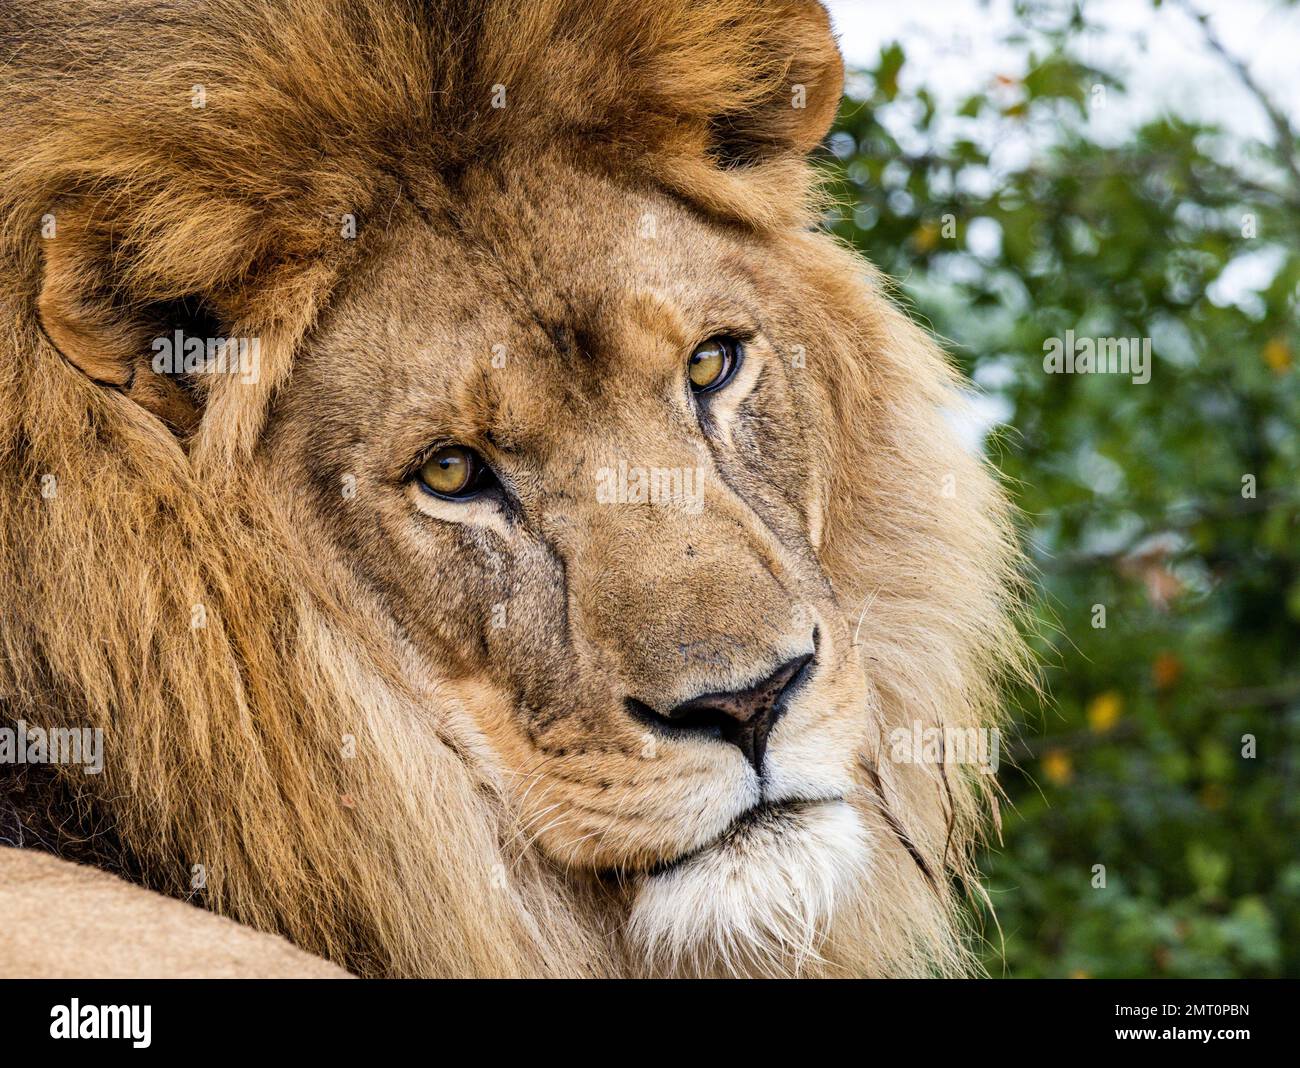 A closeup of the head of a Katanga lion (Panthera leo bleyenberghi) against blurred trees Stock Photo